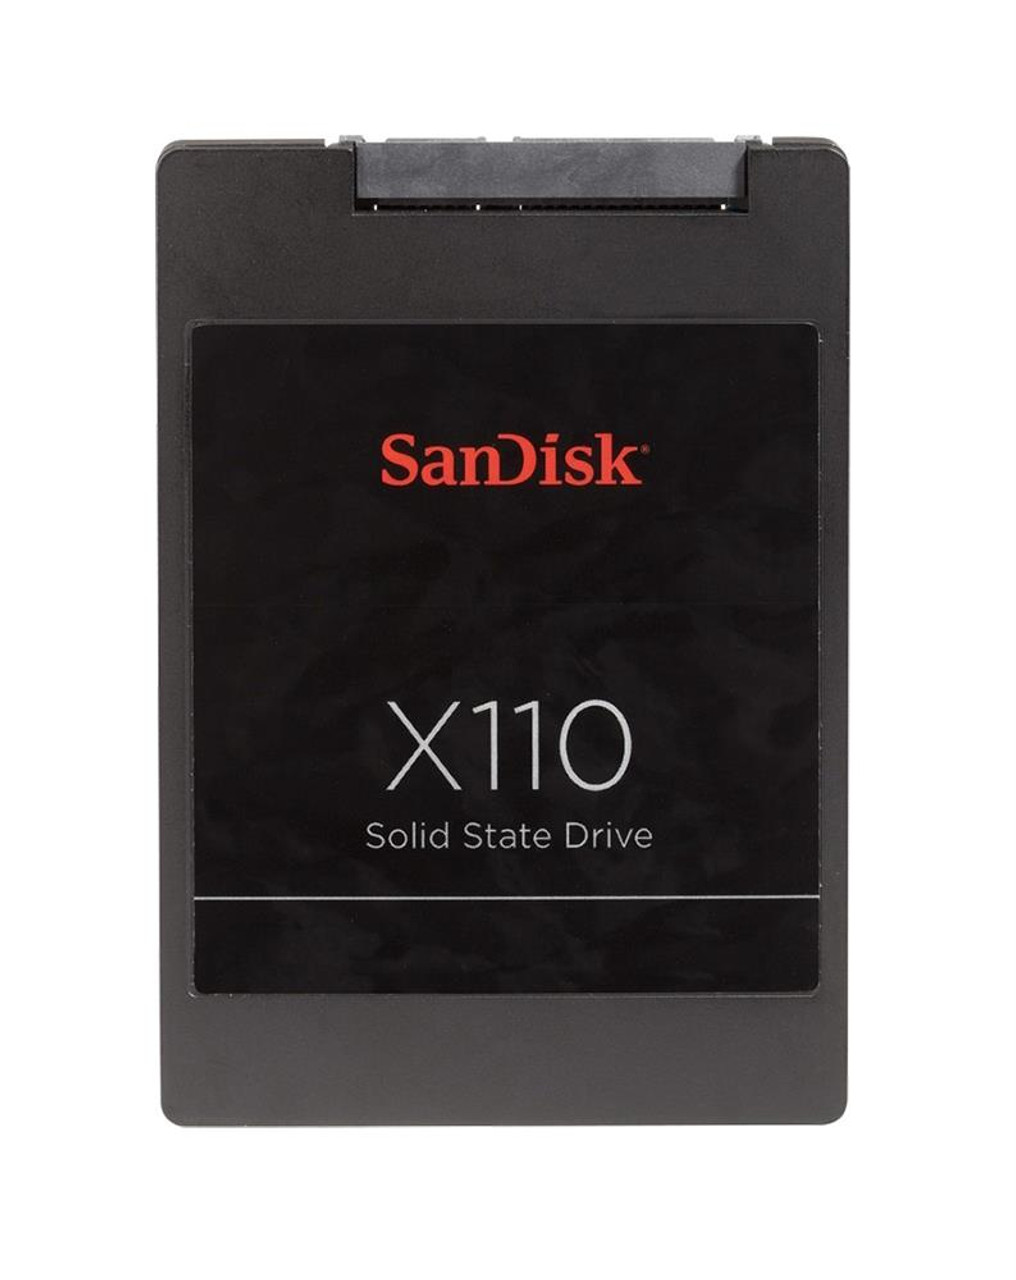 SD6SB1M-032G-1006 SanDisk X110 32GB MLC SATA 6Gbps 2.5-inch Internal Solid State Drive (SSD)